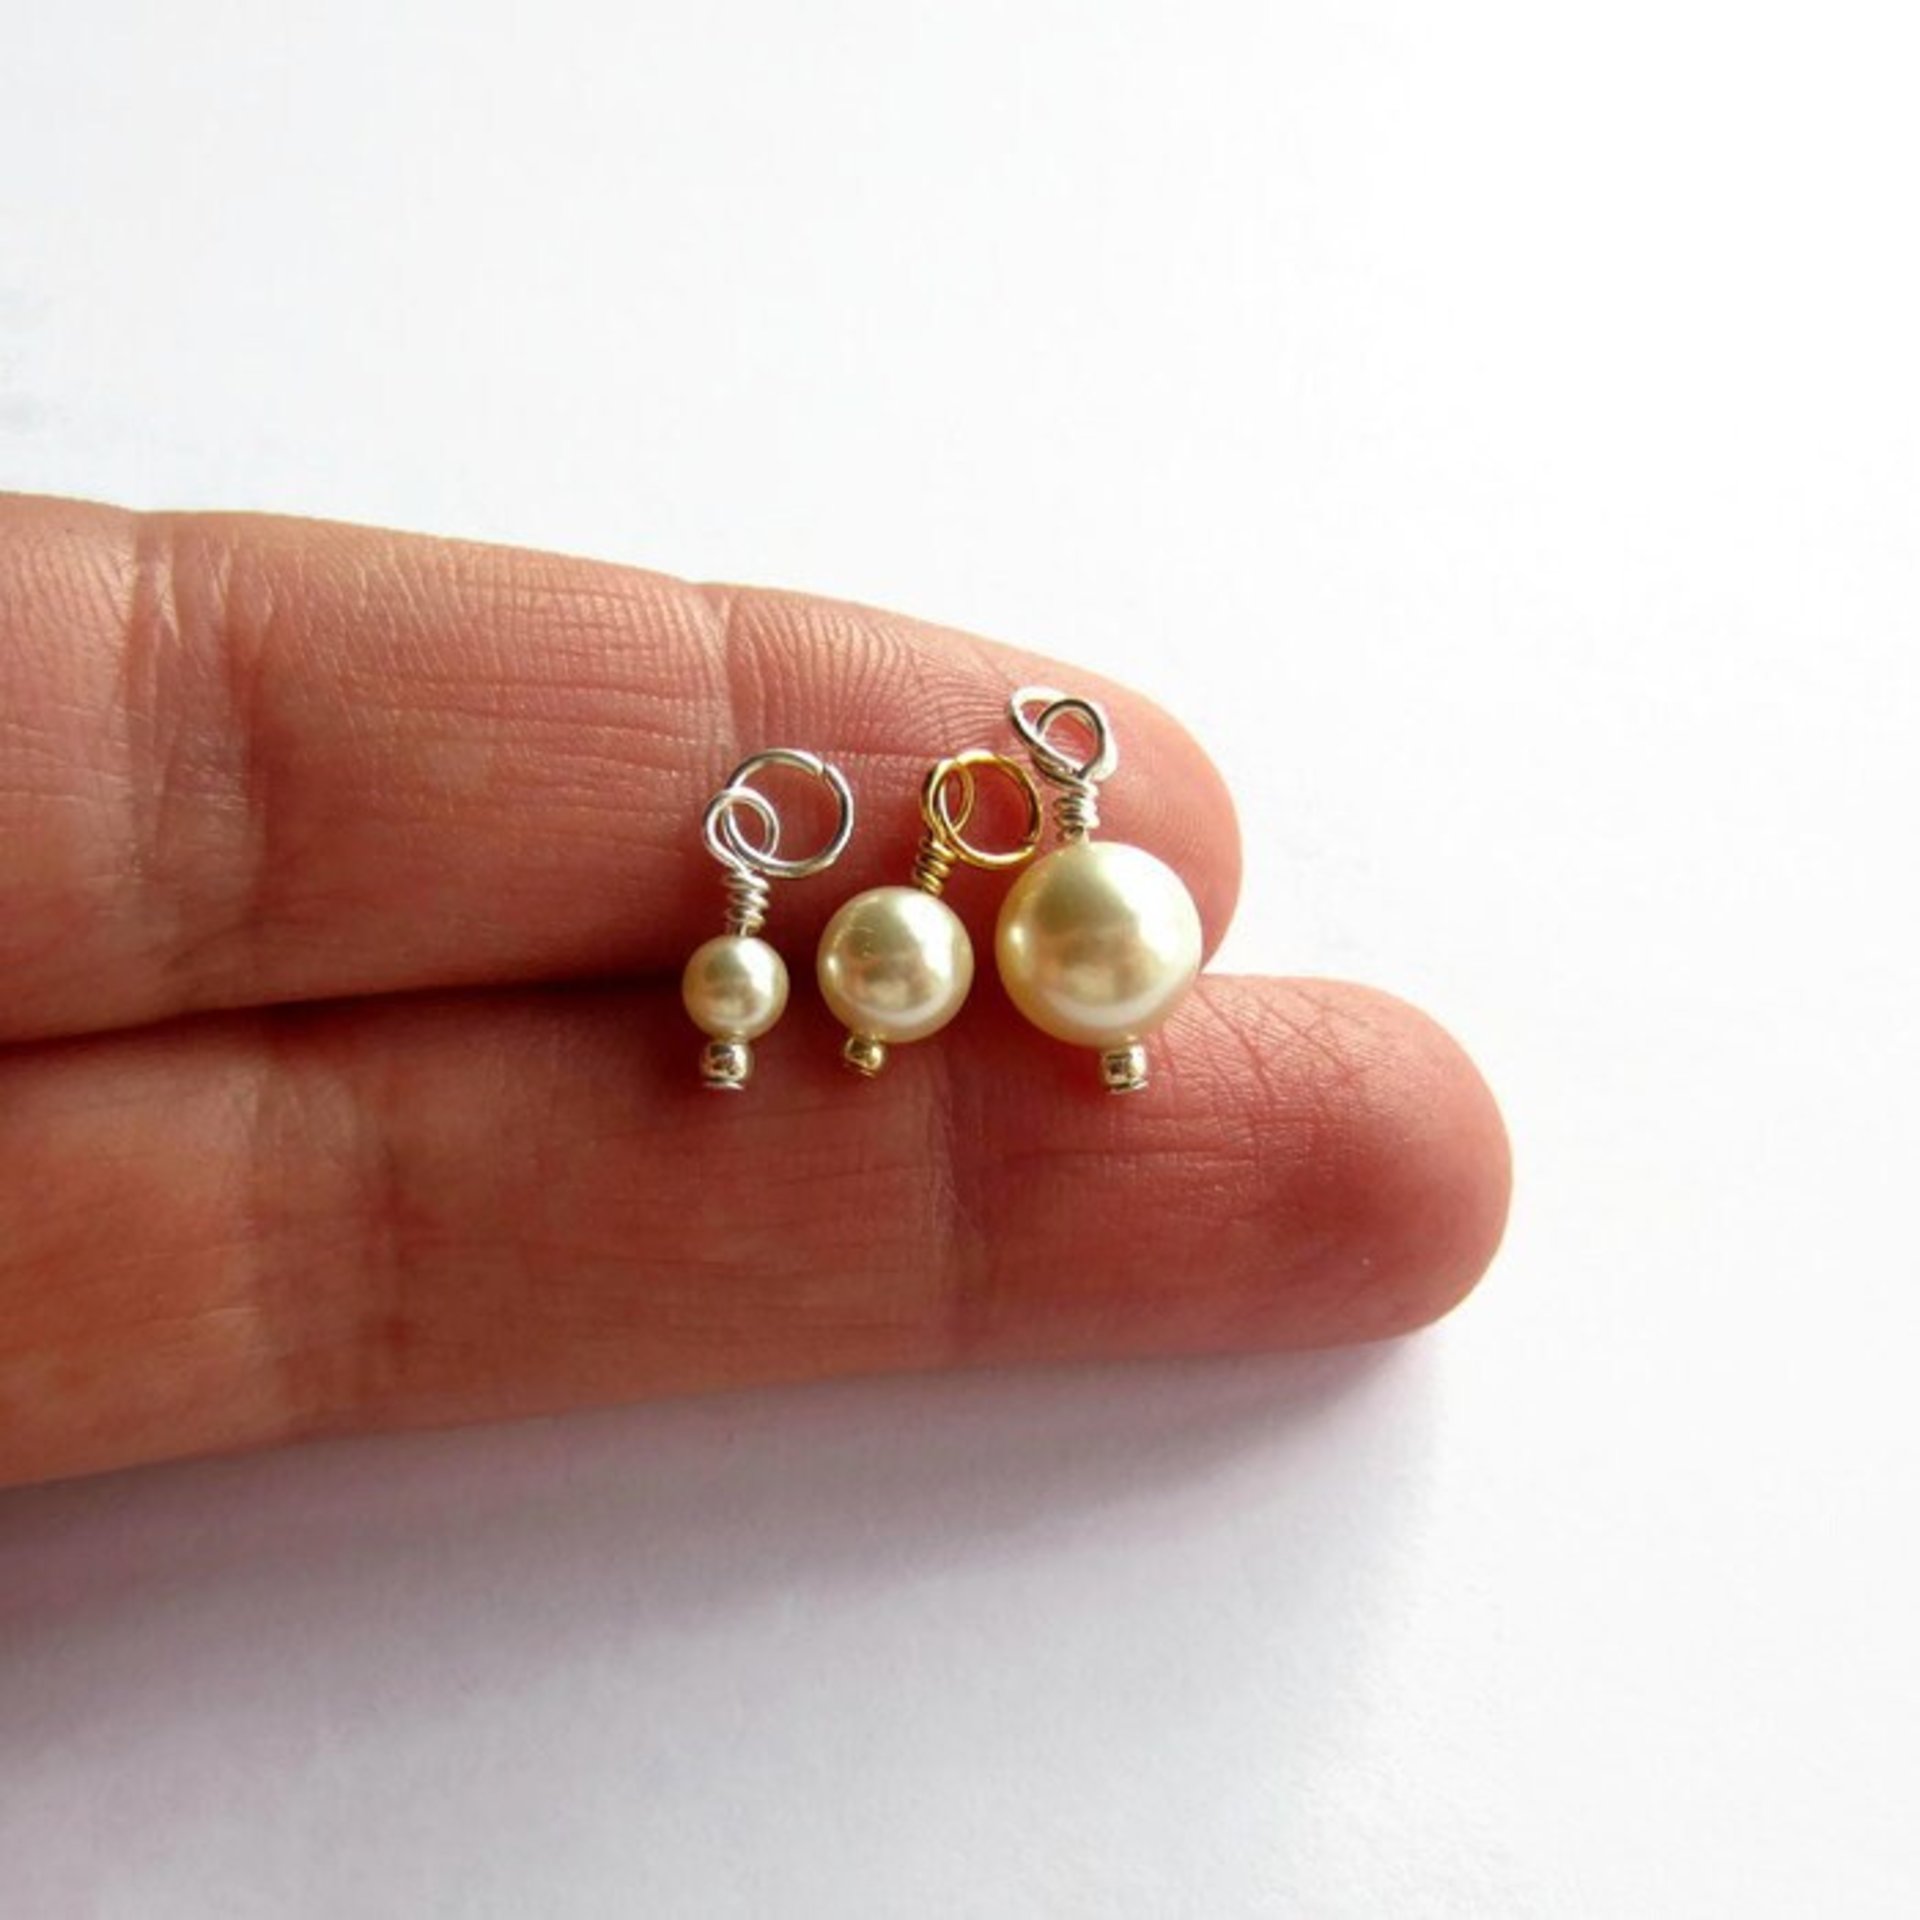 Cream Crystal Pearl Charm ~ June Birthstone ~ Handmade by The Tiny Tree Frog Jewellery